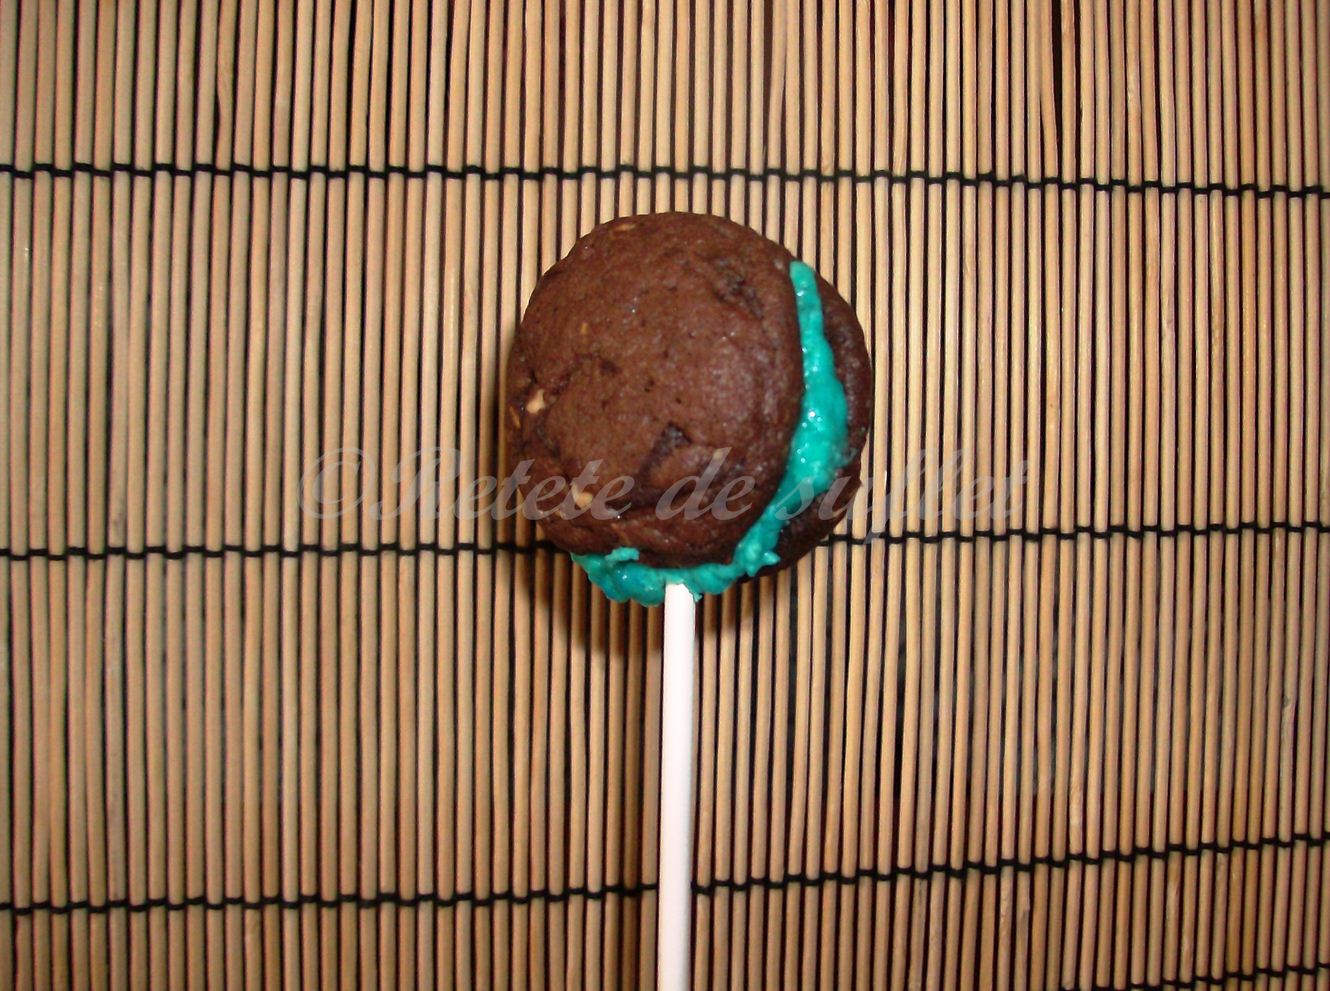 Biscuiti ciocomania lollipop